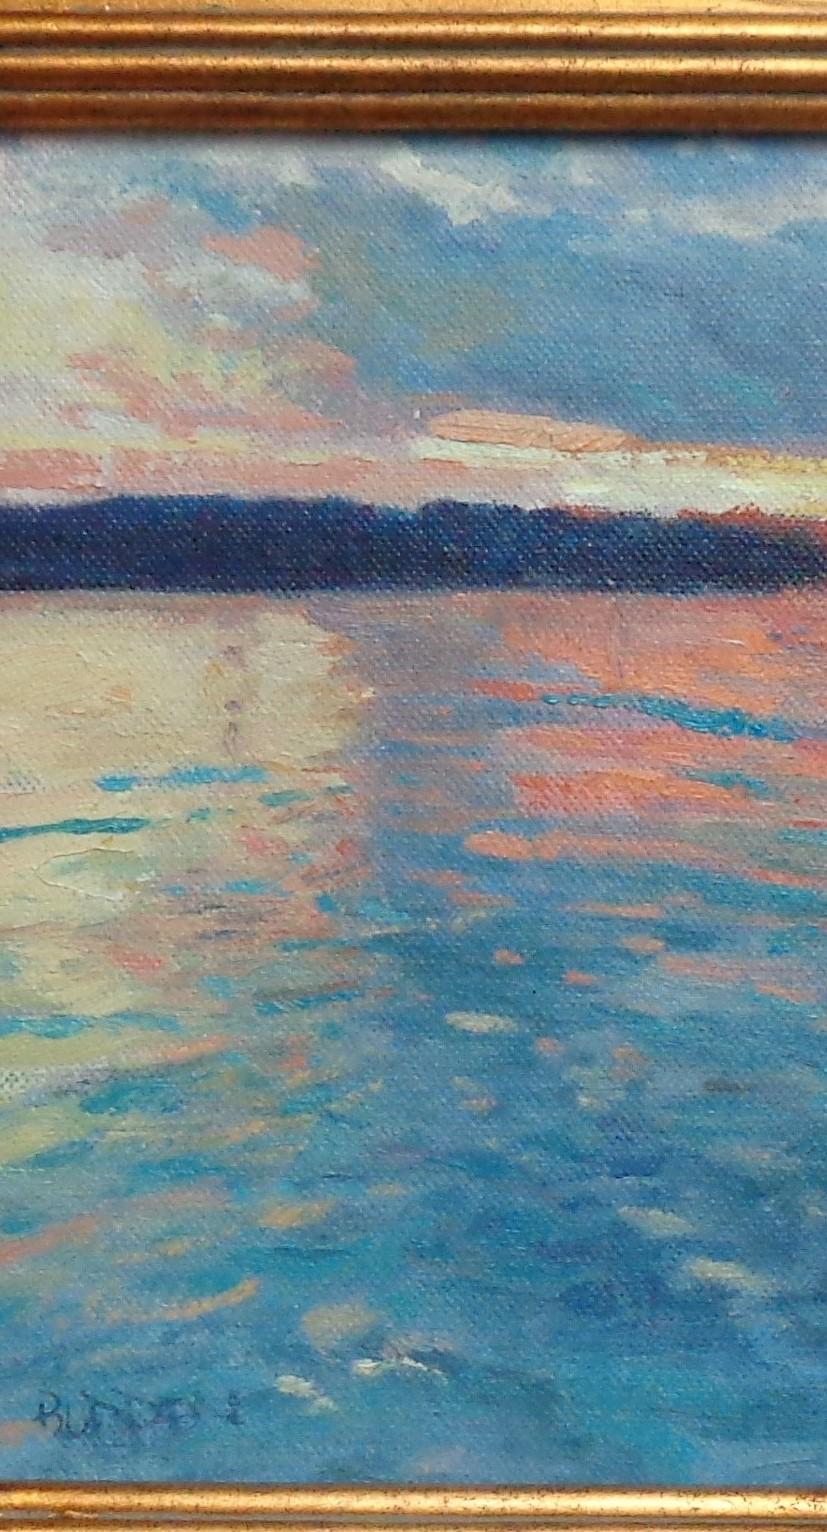  Impressionistic Marine Oil Painting Michael Budden Sunrise Reflections 1